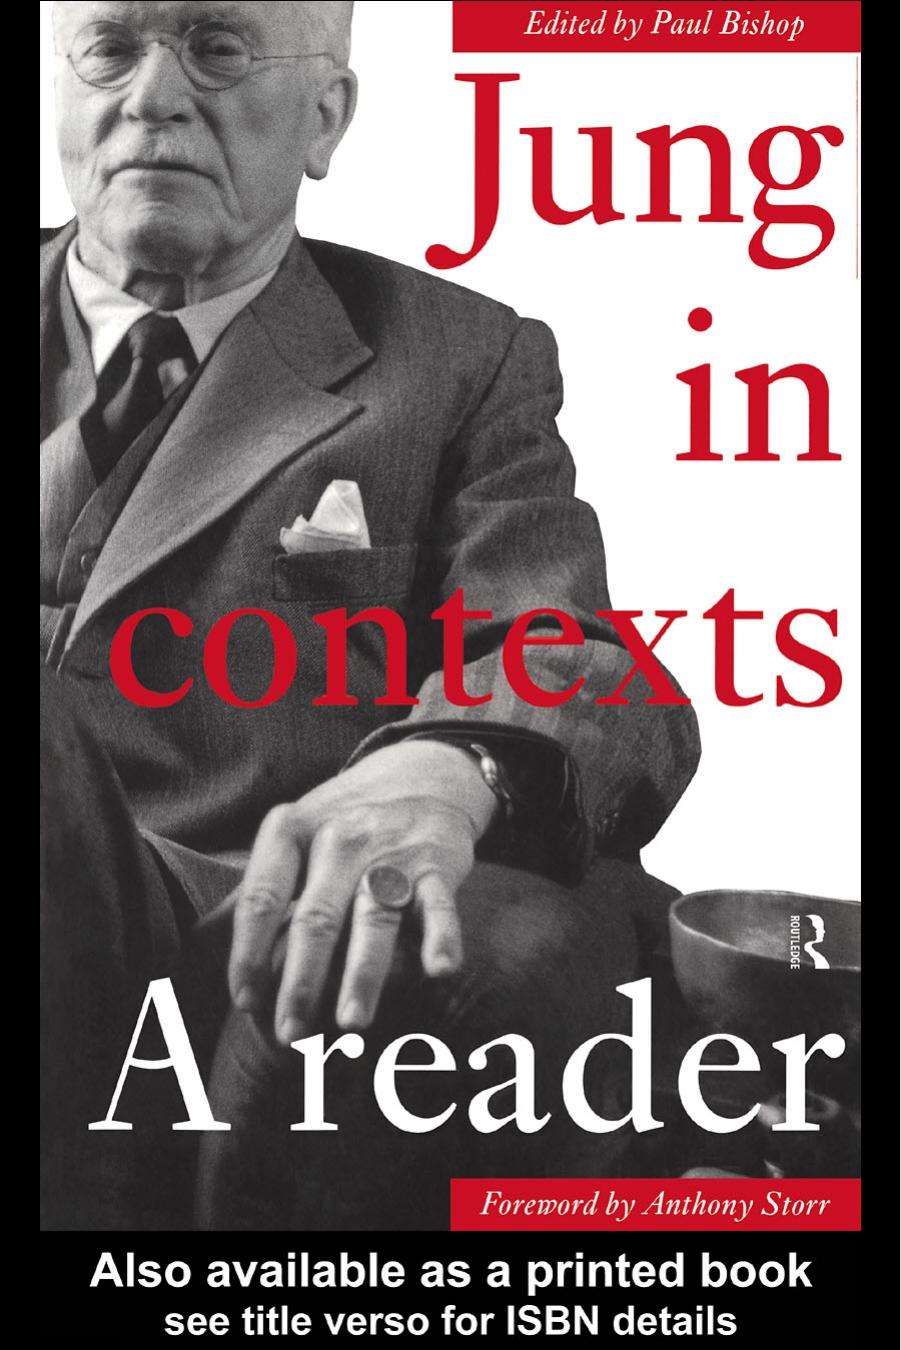 Jung in Contexts: A Reader